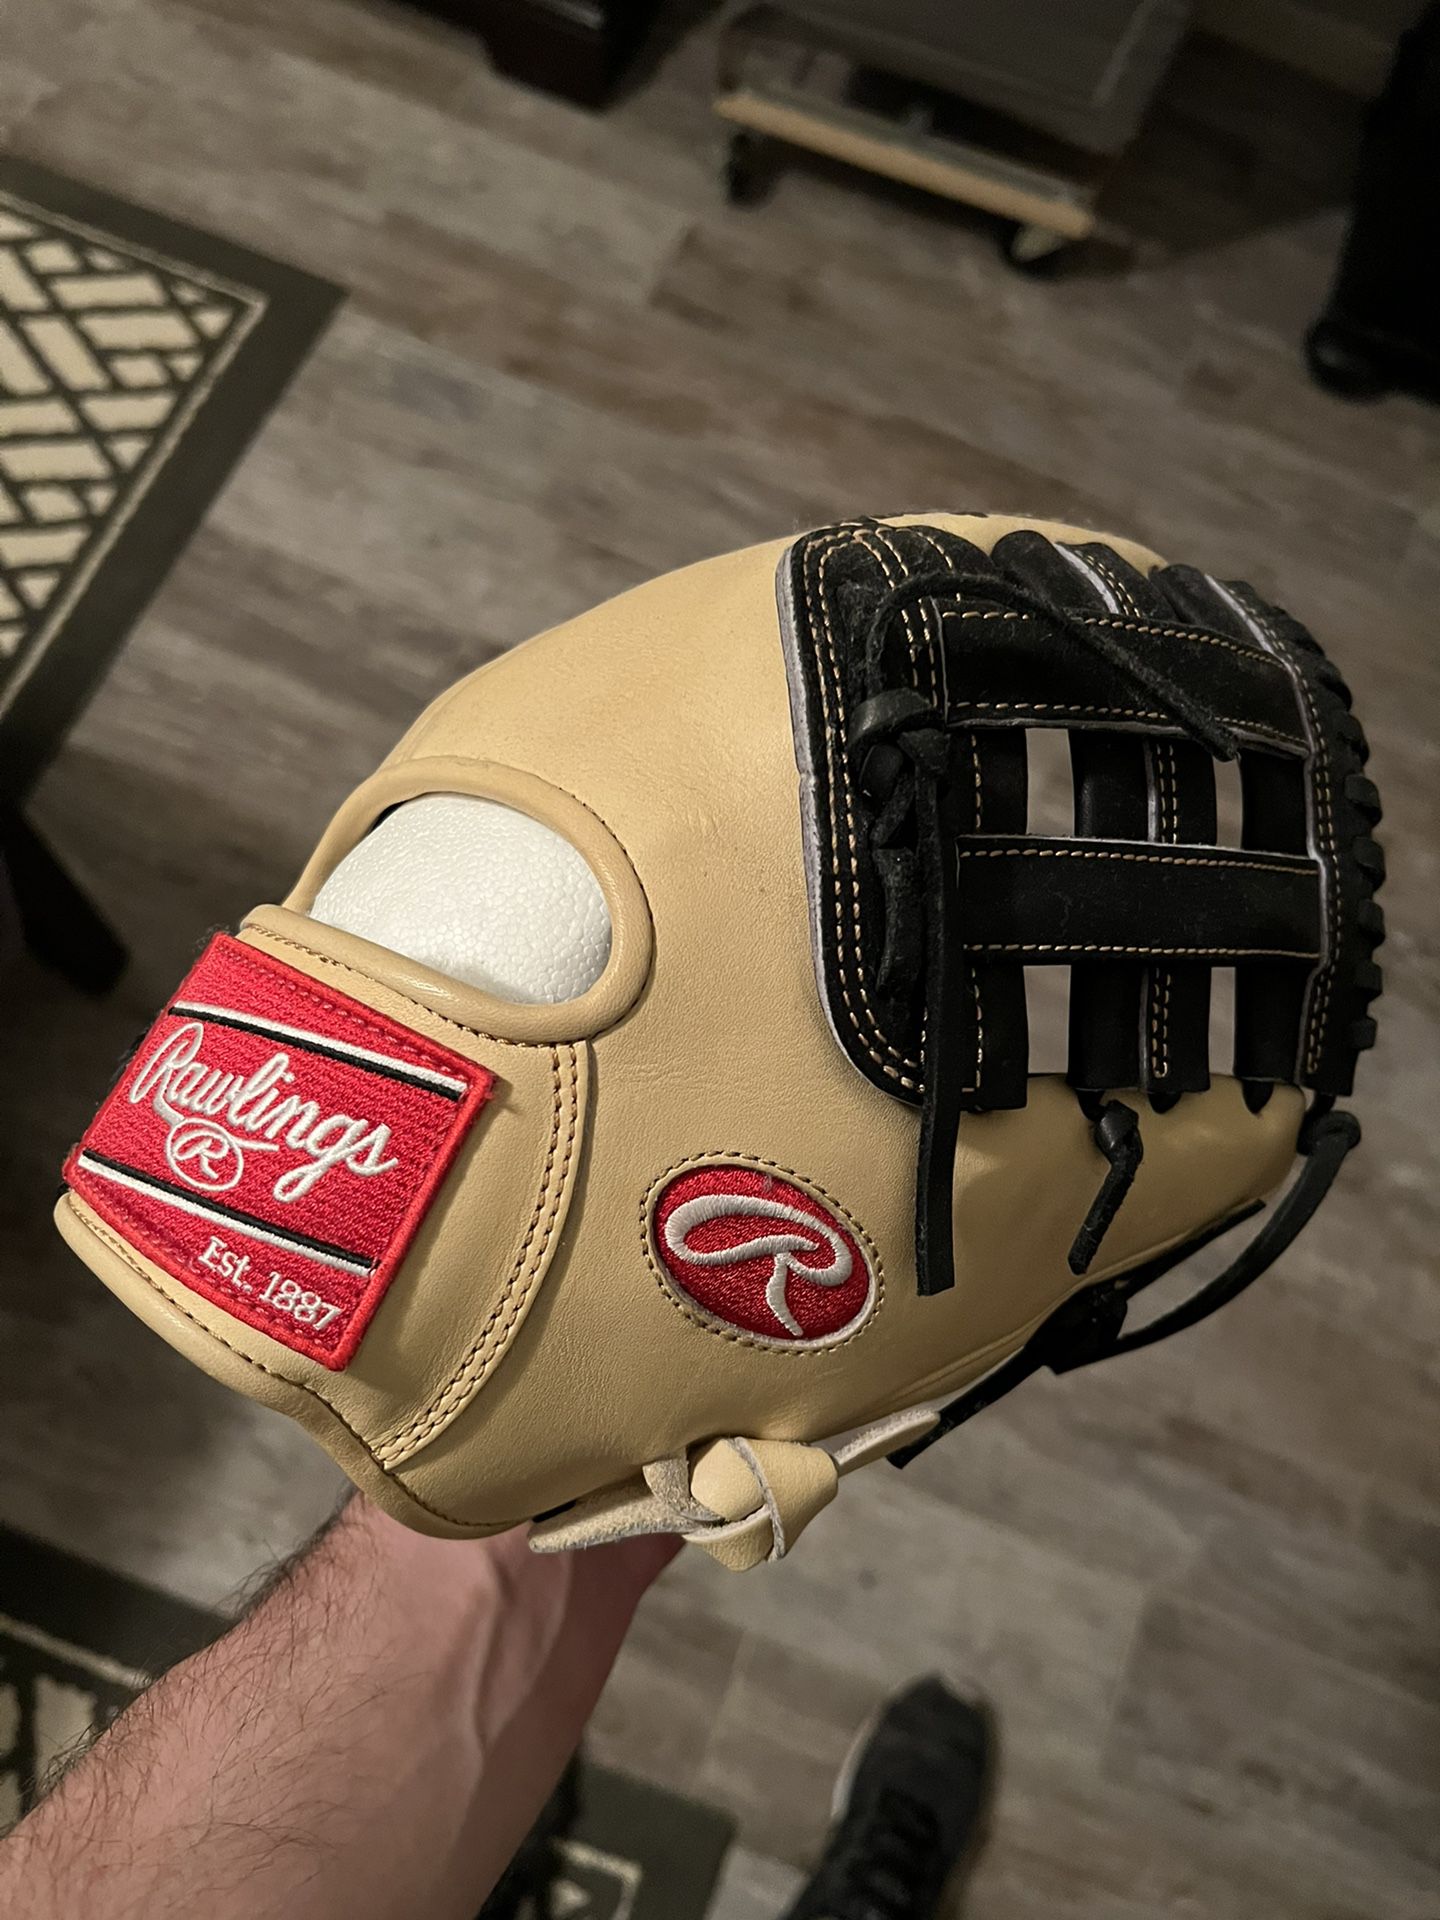 Brand New Rawlings Pro Preferred Infield Leather Baseball Glove Tan/Black